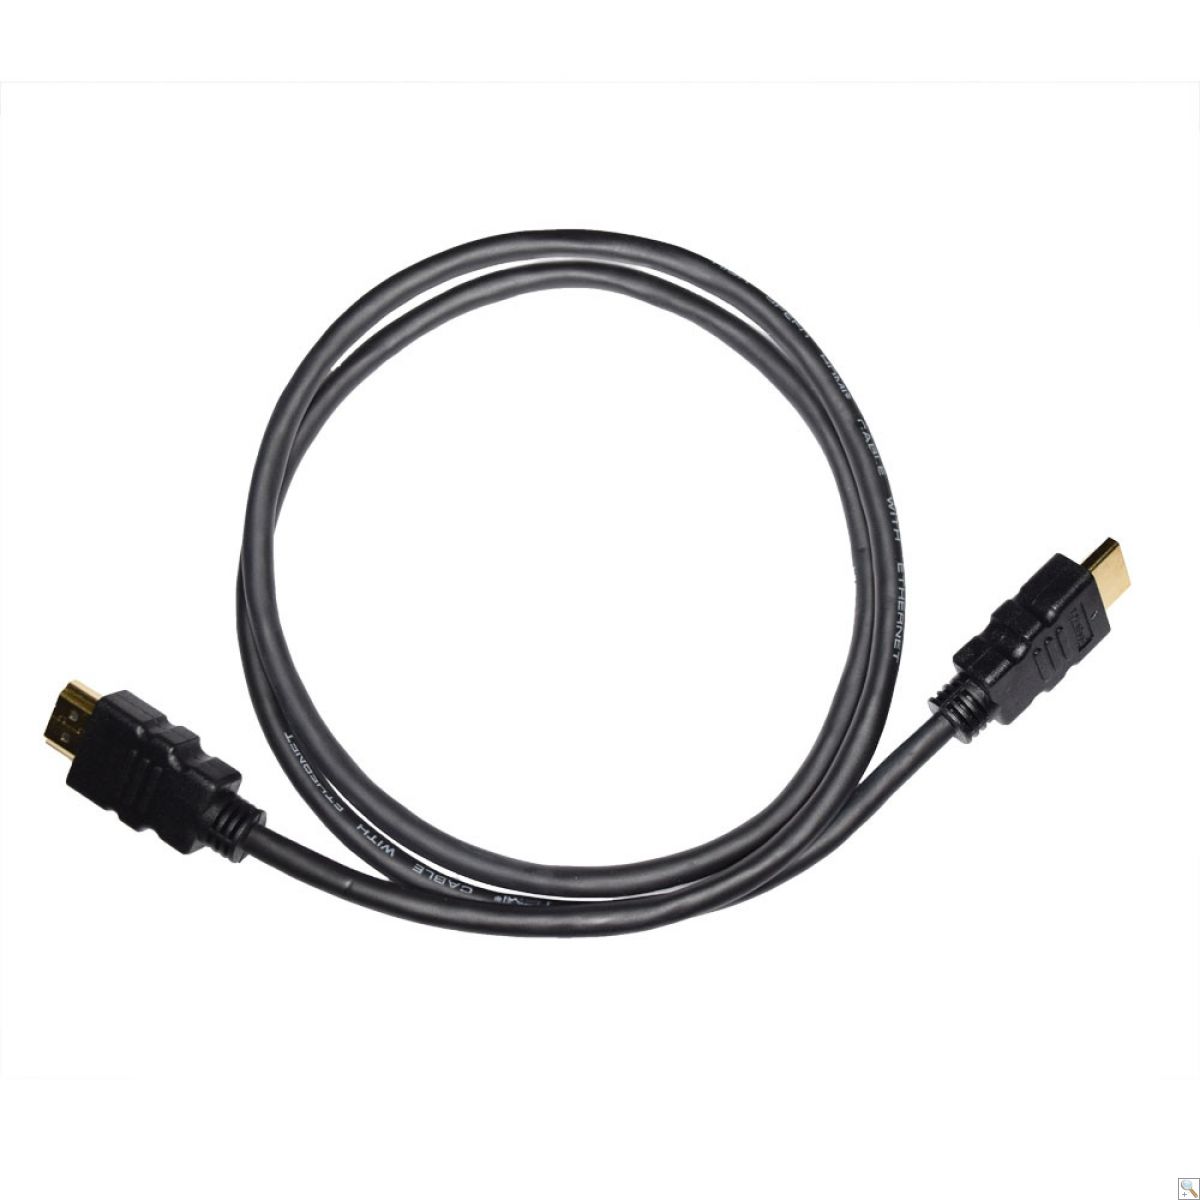 HDMI Cable - 2M